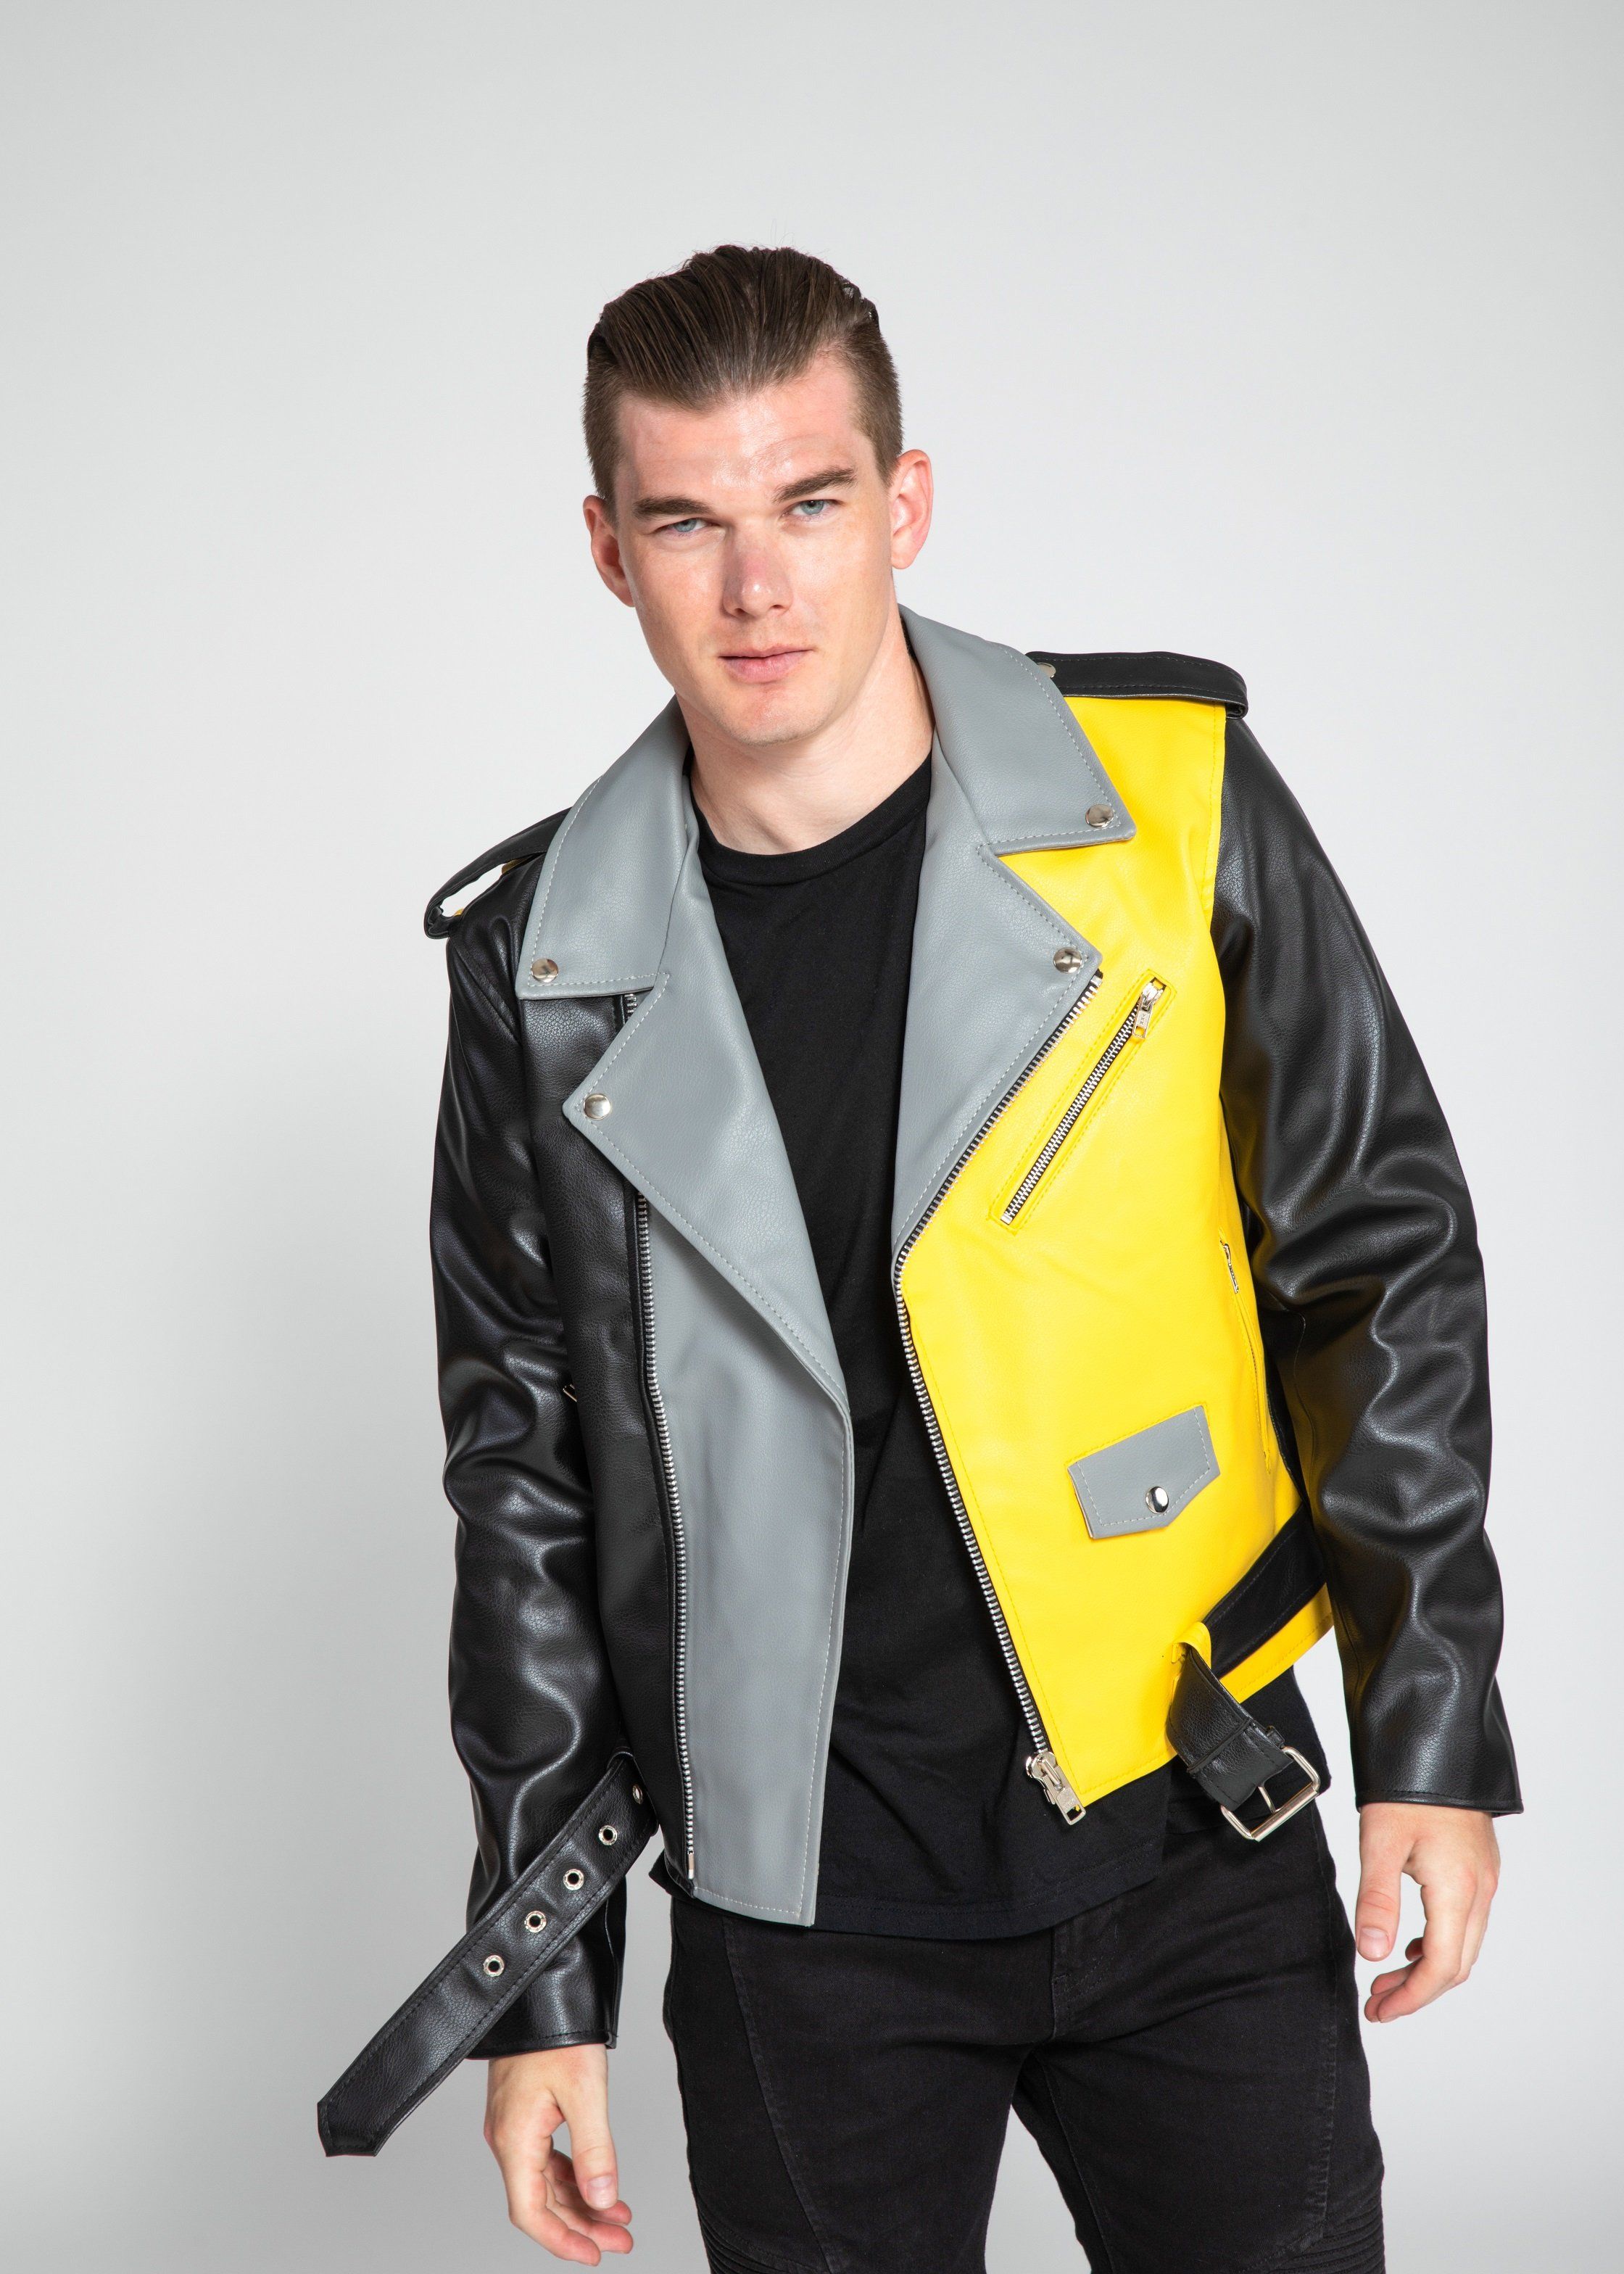 yellow leather jacket men